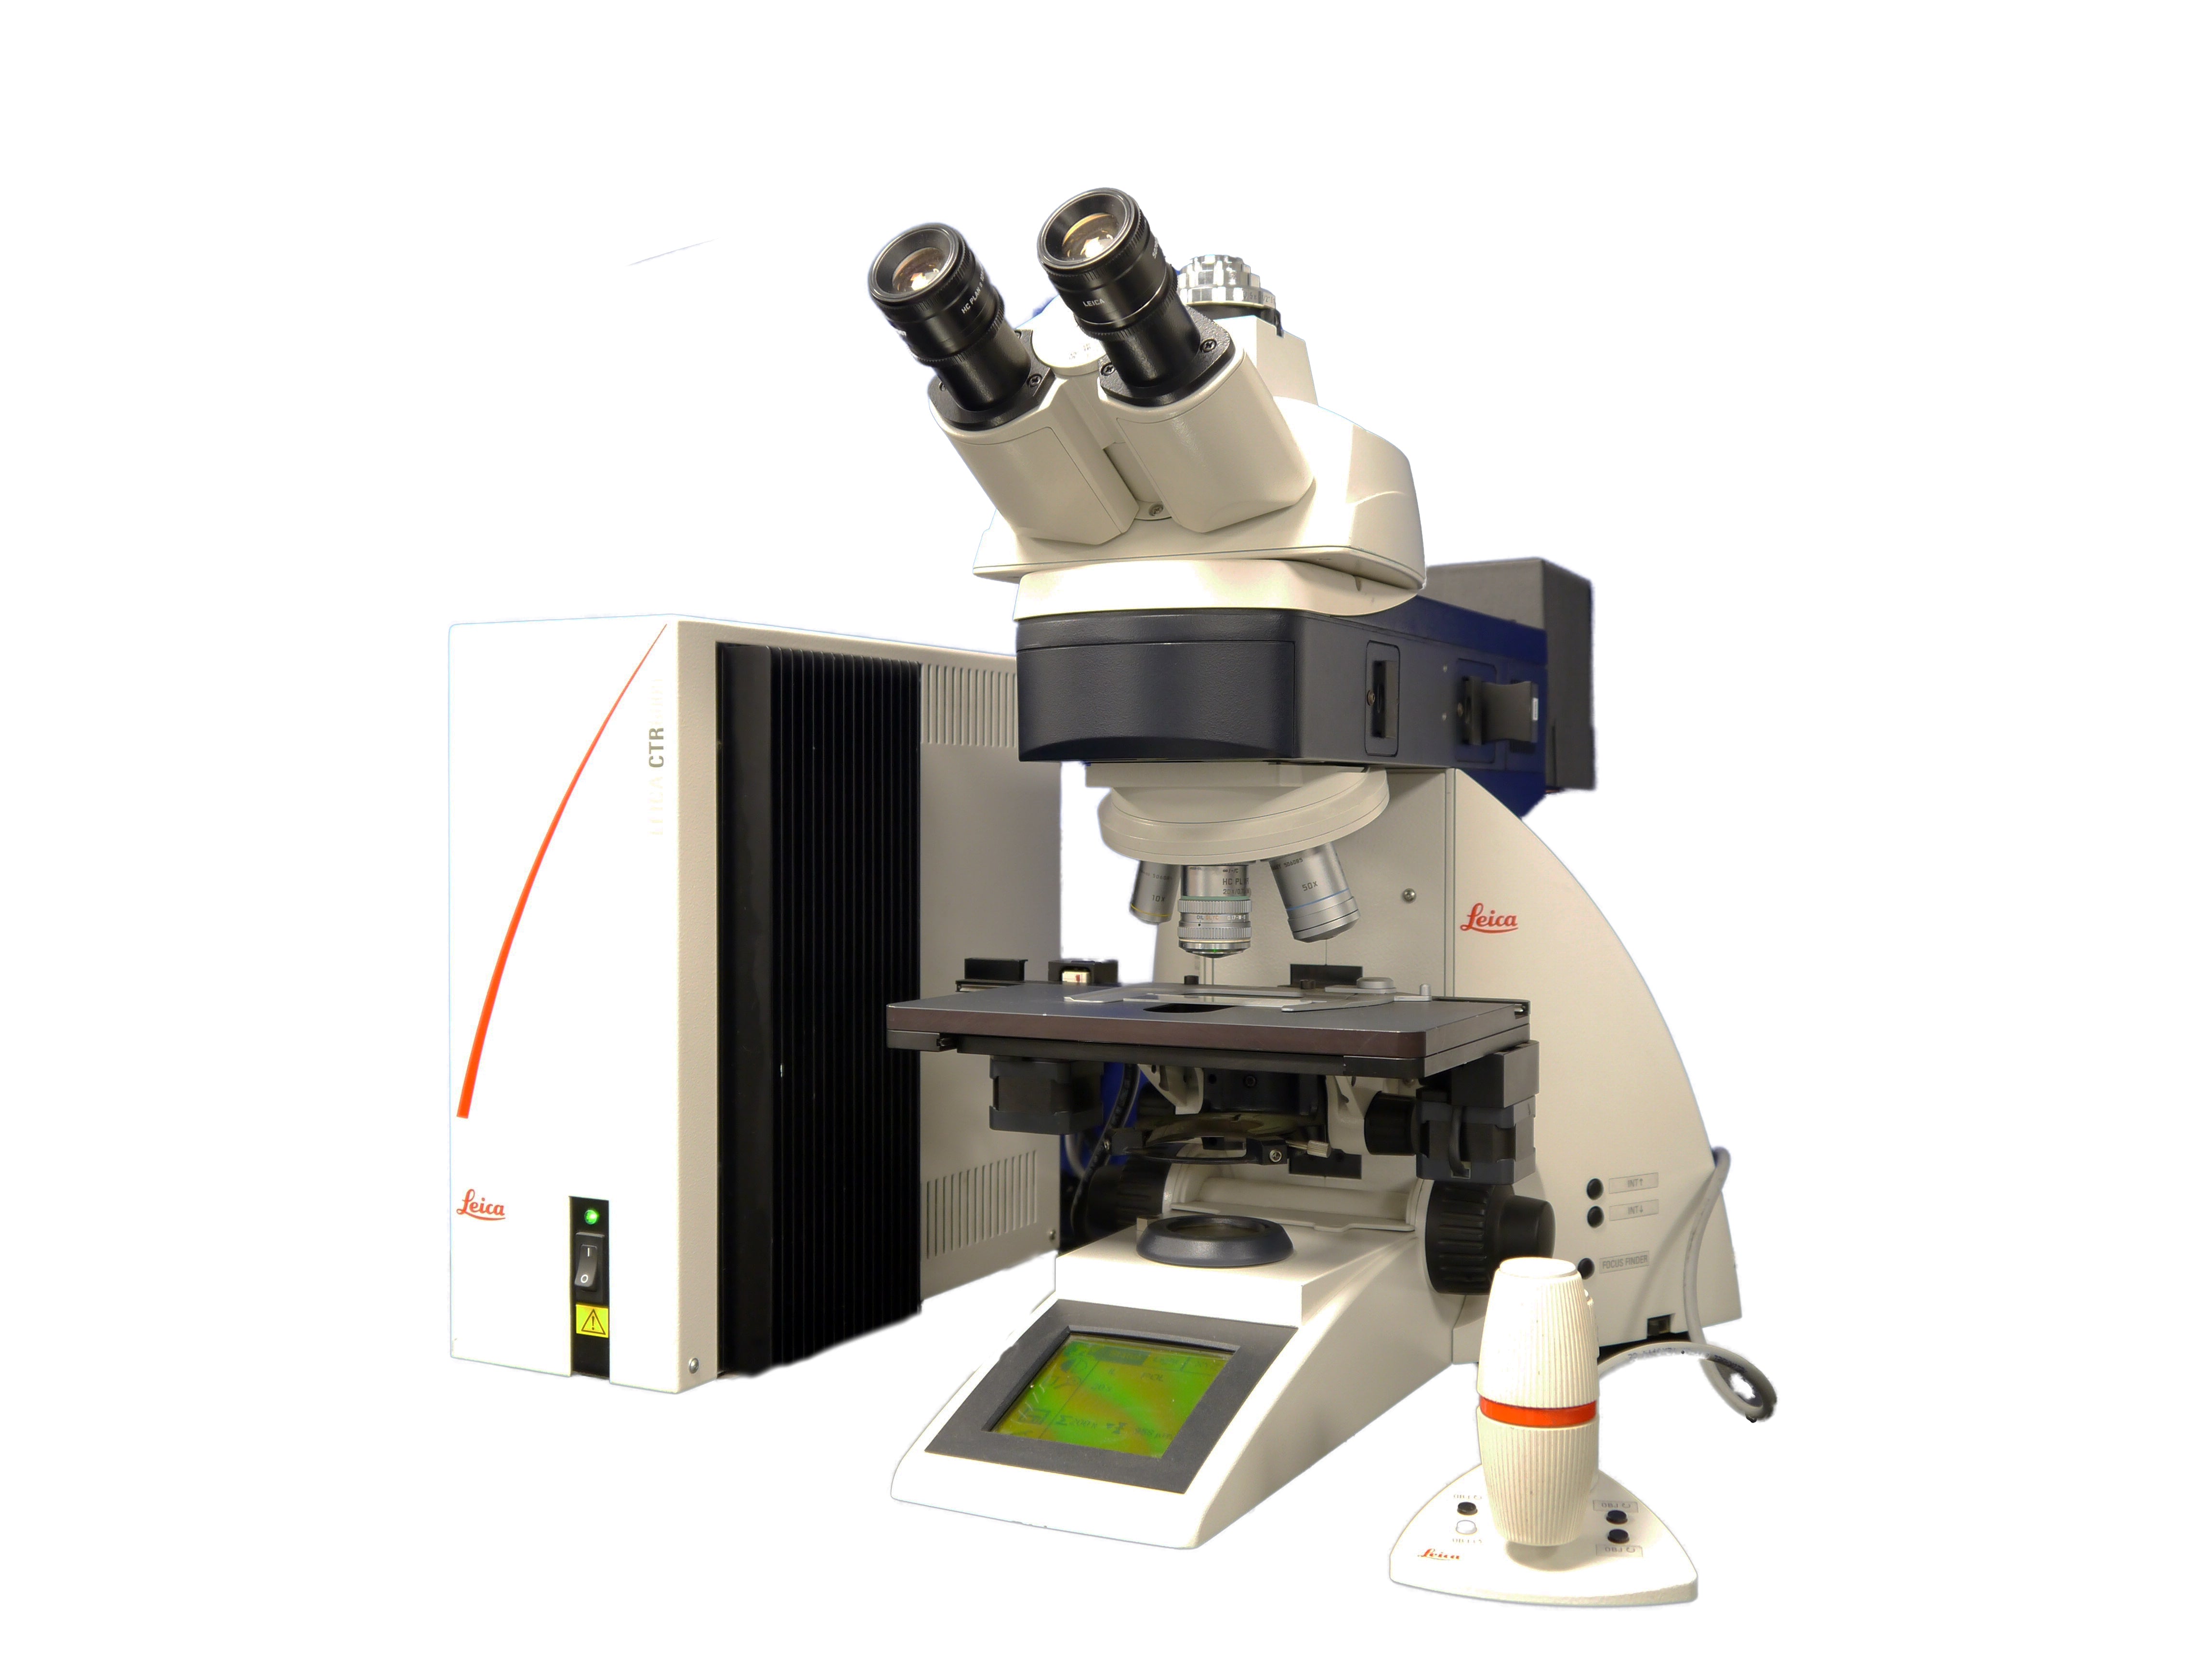 Leica DM6000 M upright metallurgical Microscope